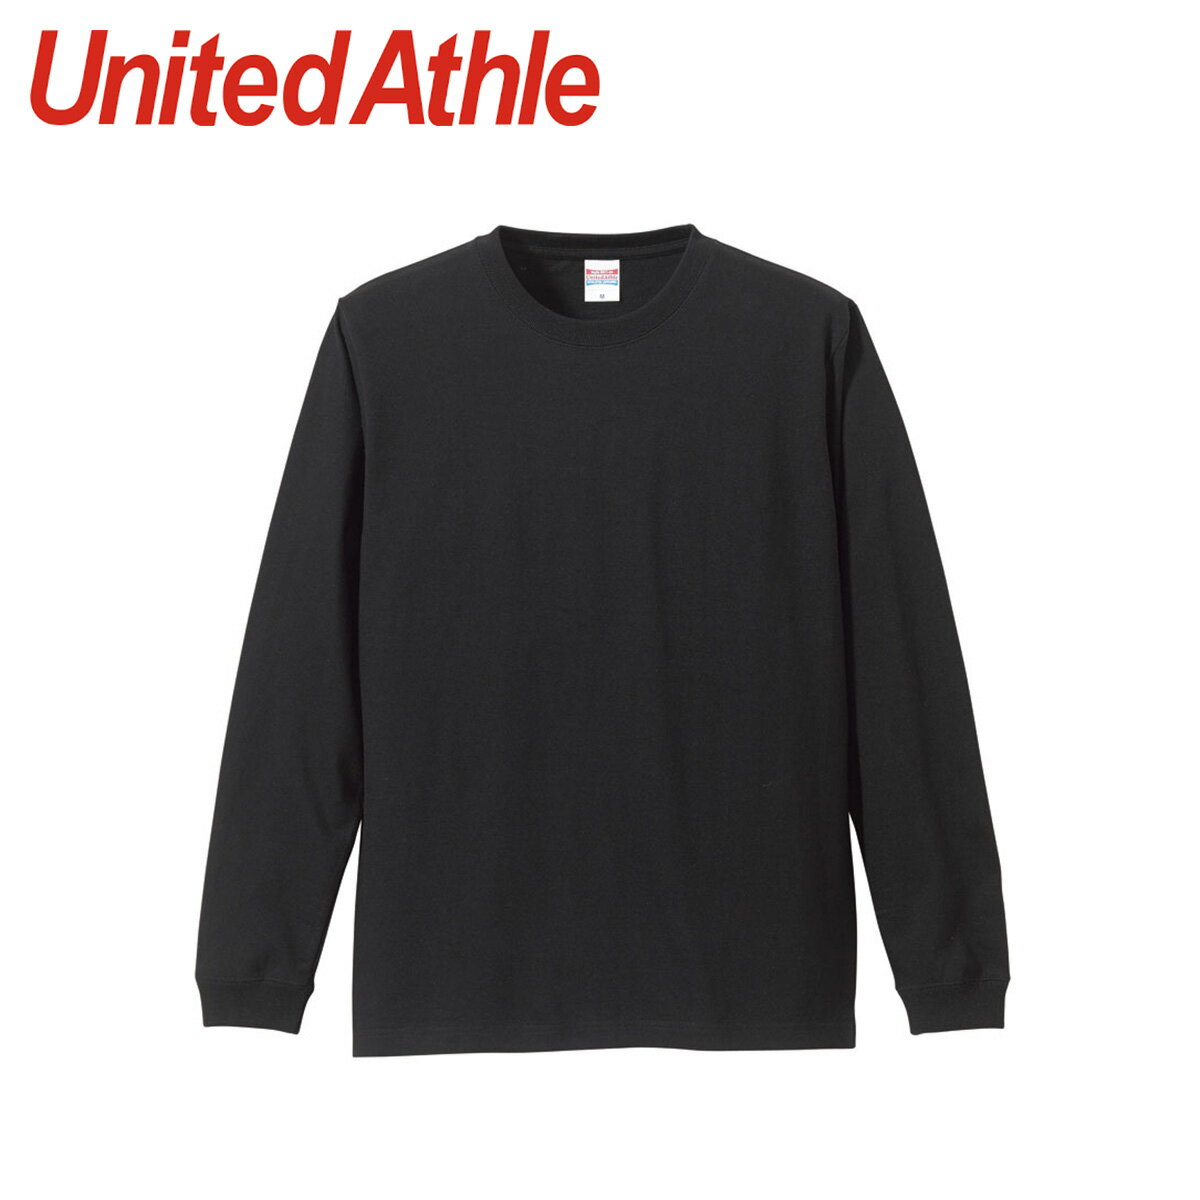 United Athle 5.6 OZ LONGSLEEVE SHIRT ユナイテッドアスレ Tシャツ メンズ 長袖 ロンT カットソー クルーネック ブラック 黒 5011-01